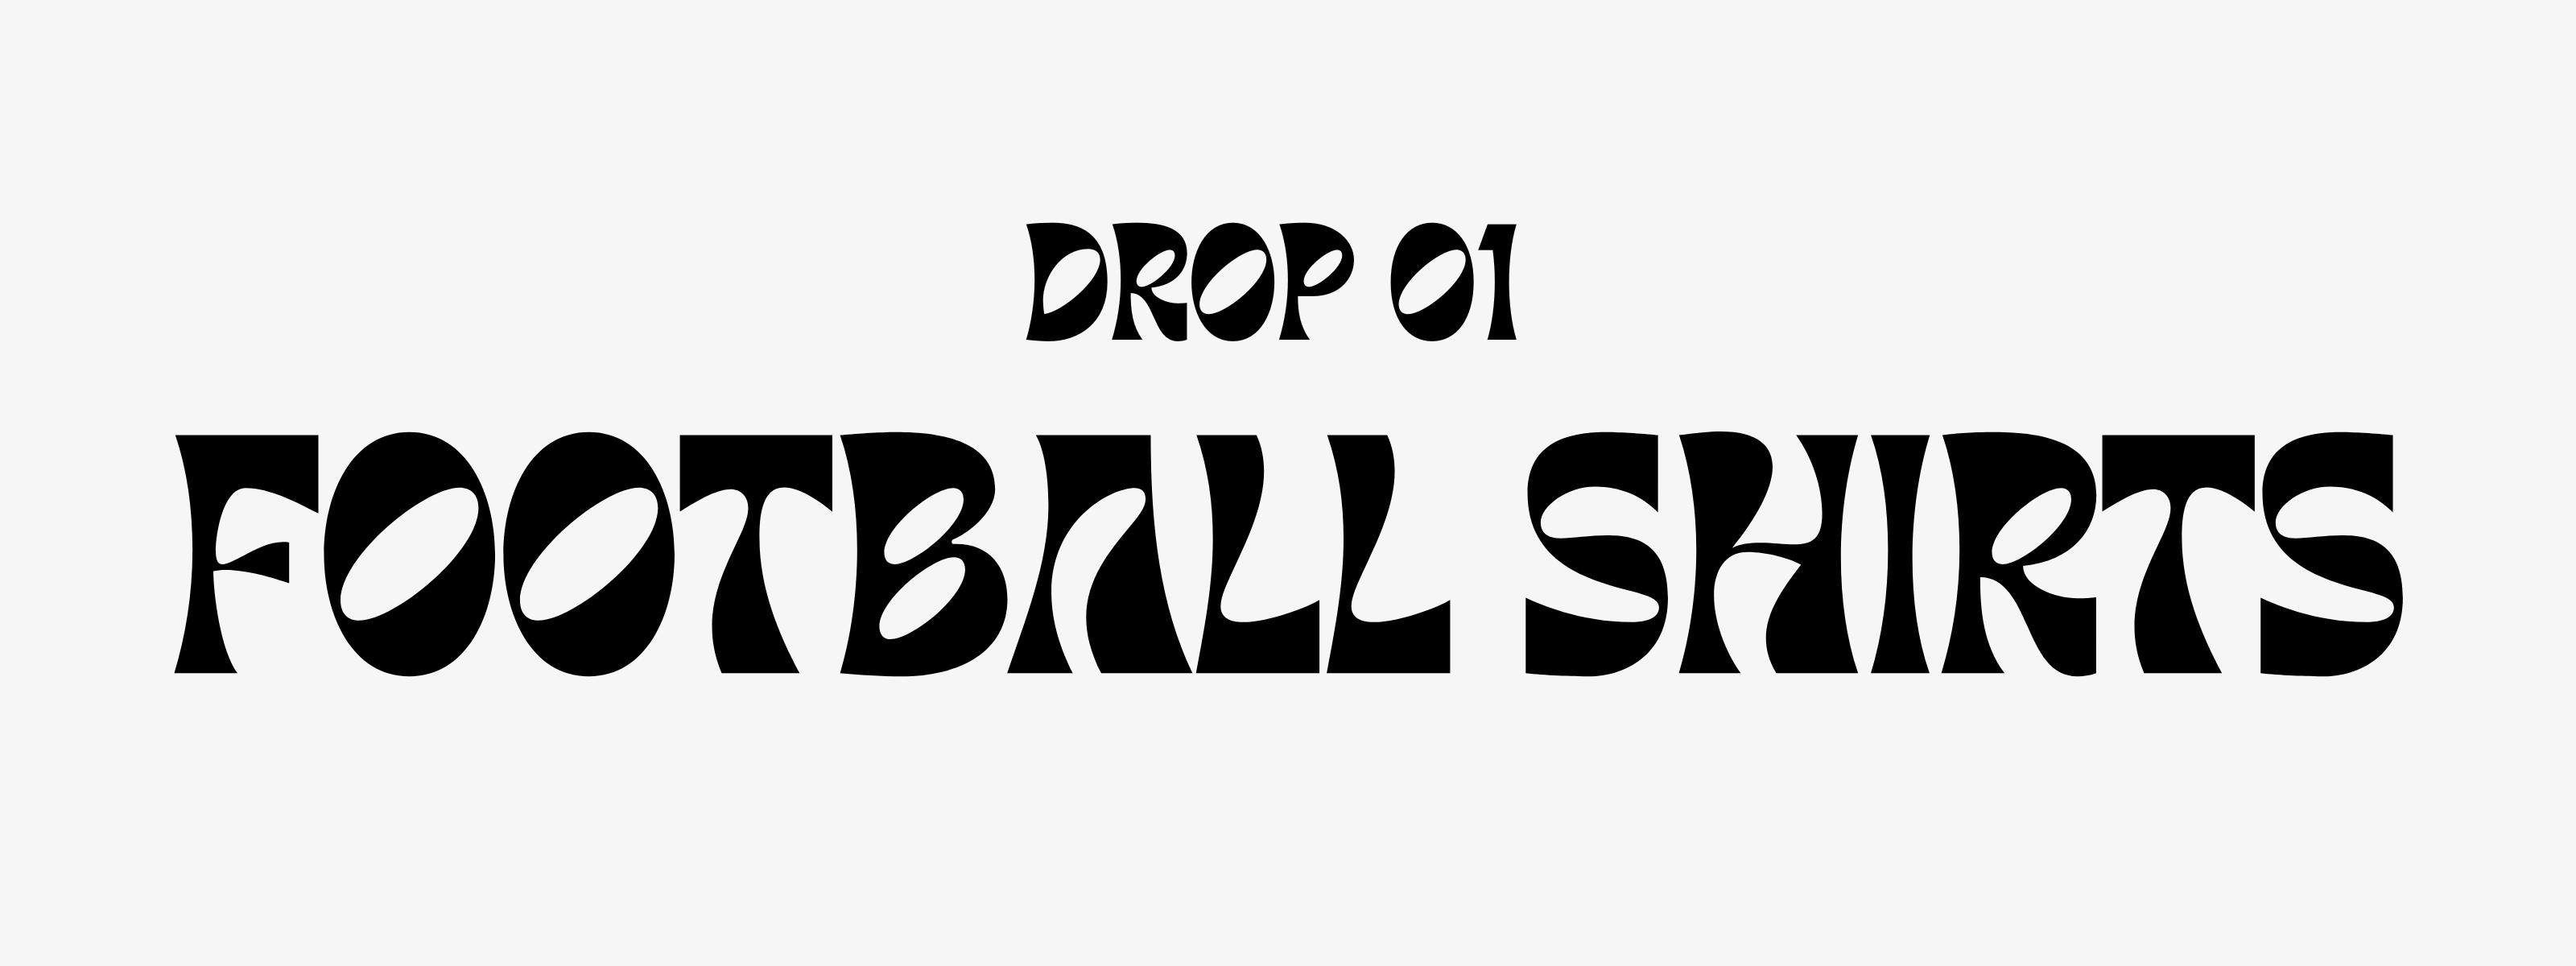 Drop 01 - Football Shirts